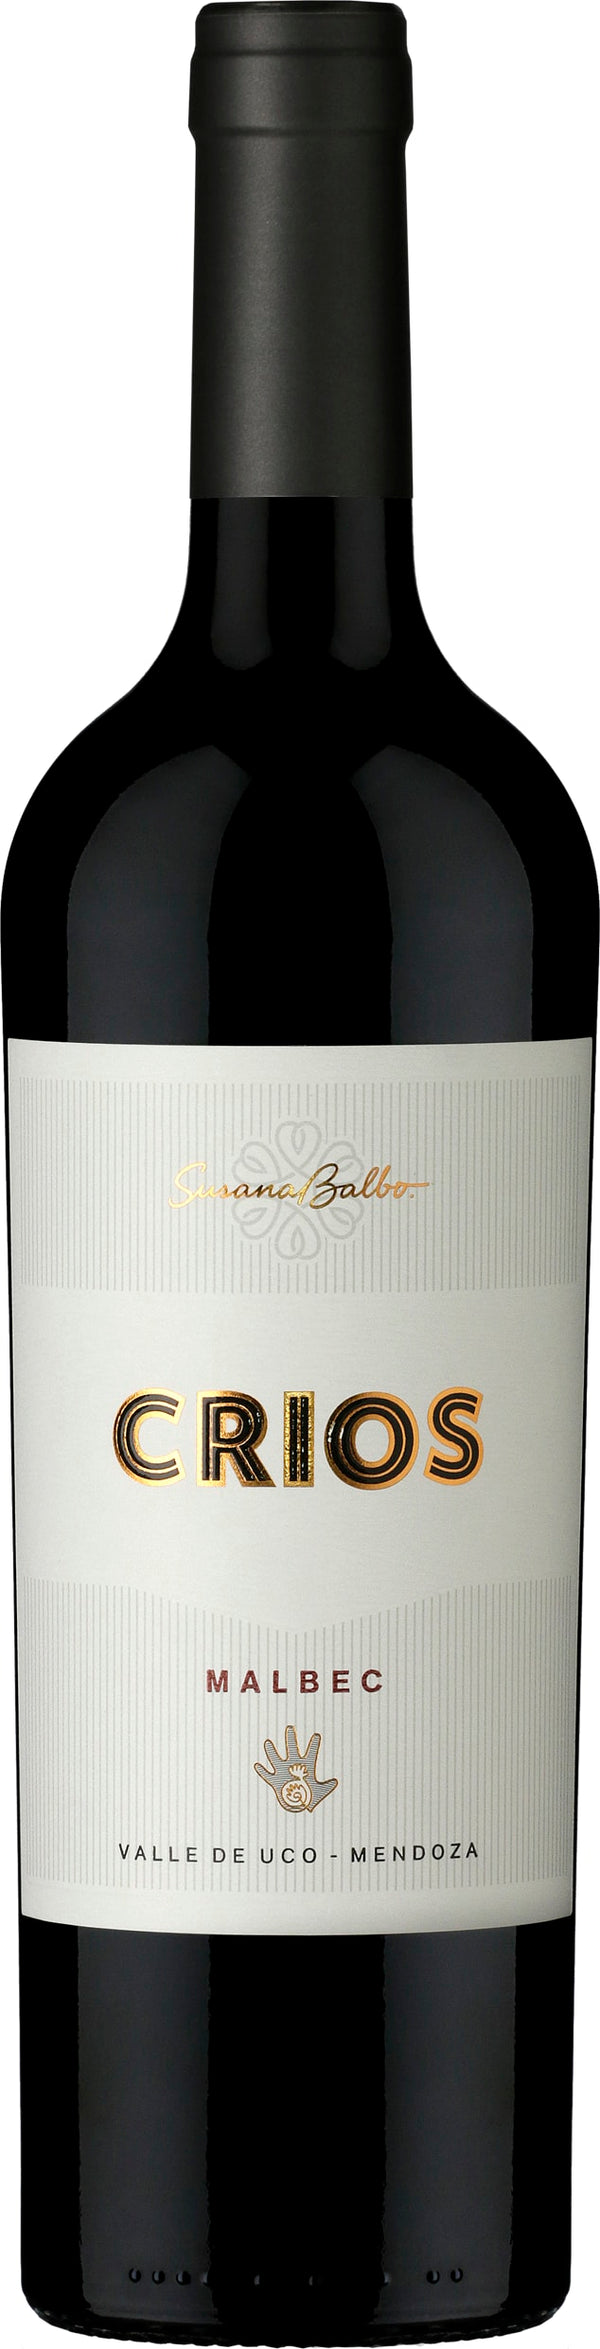 Susana Balbo Crios Malbec 2021 6x75cl - Just Wines 